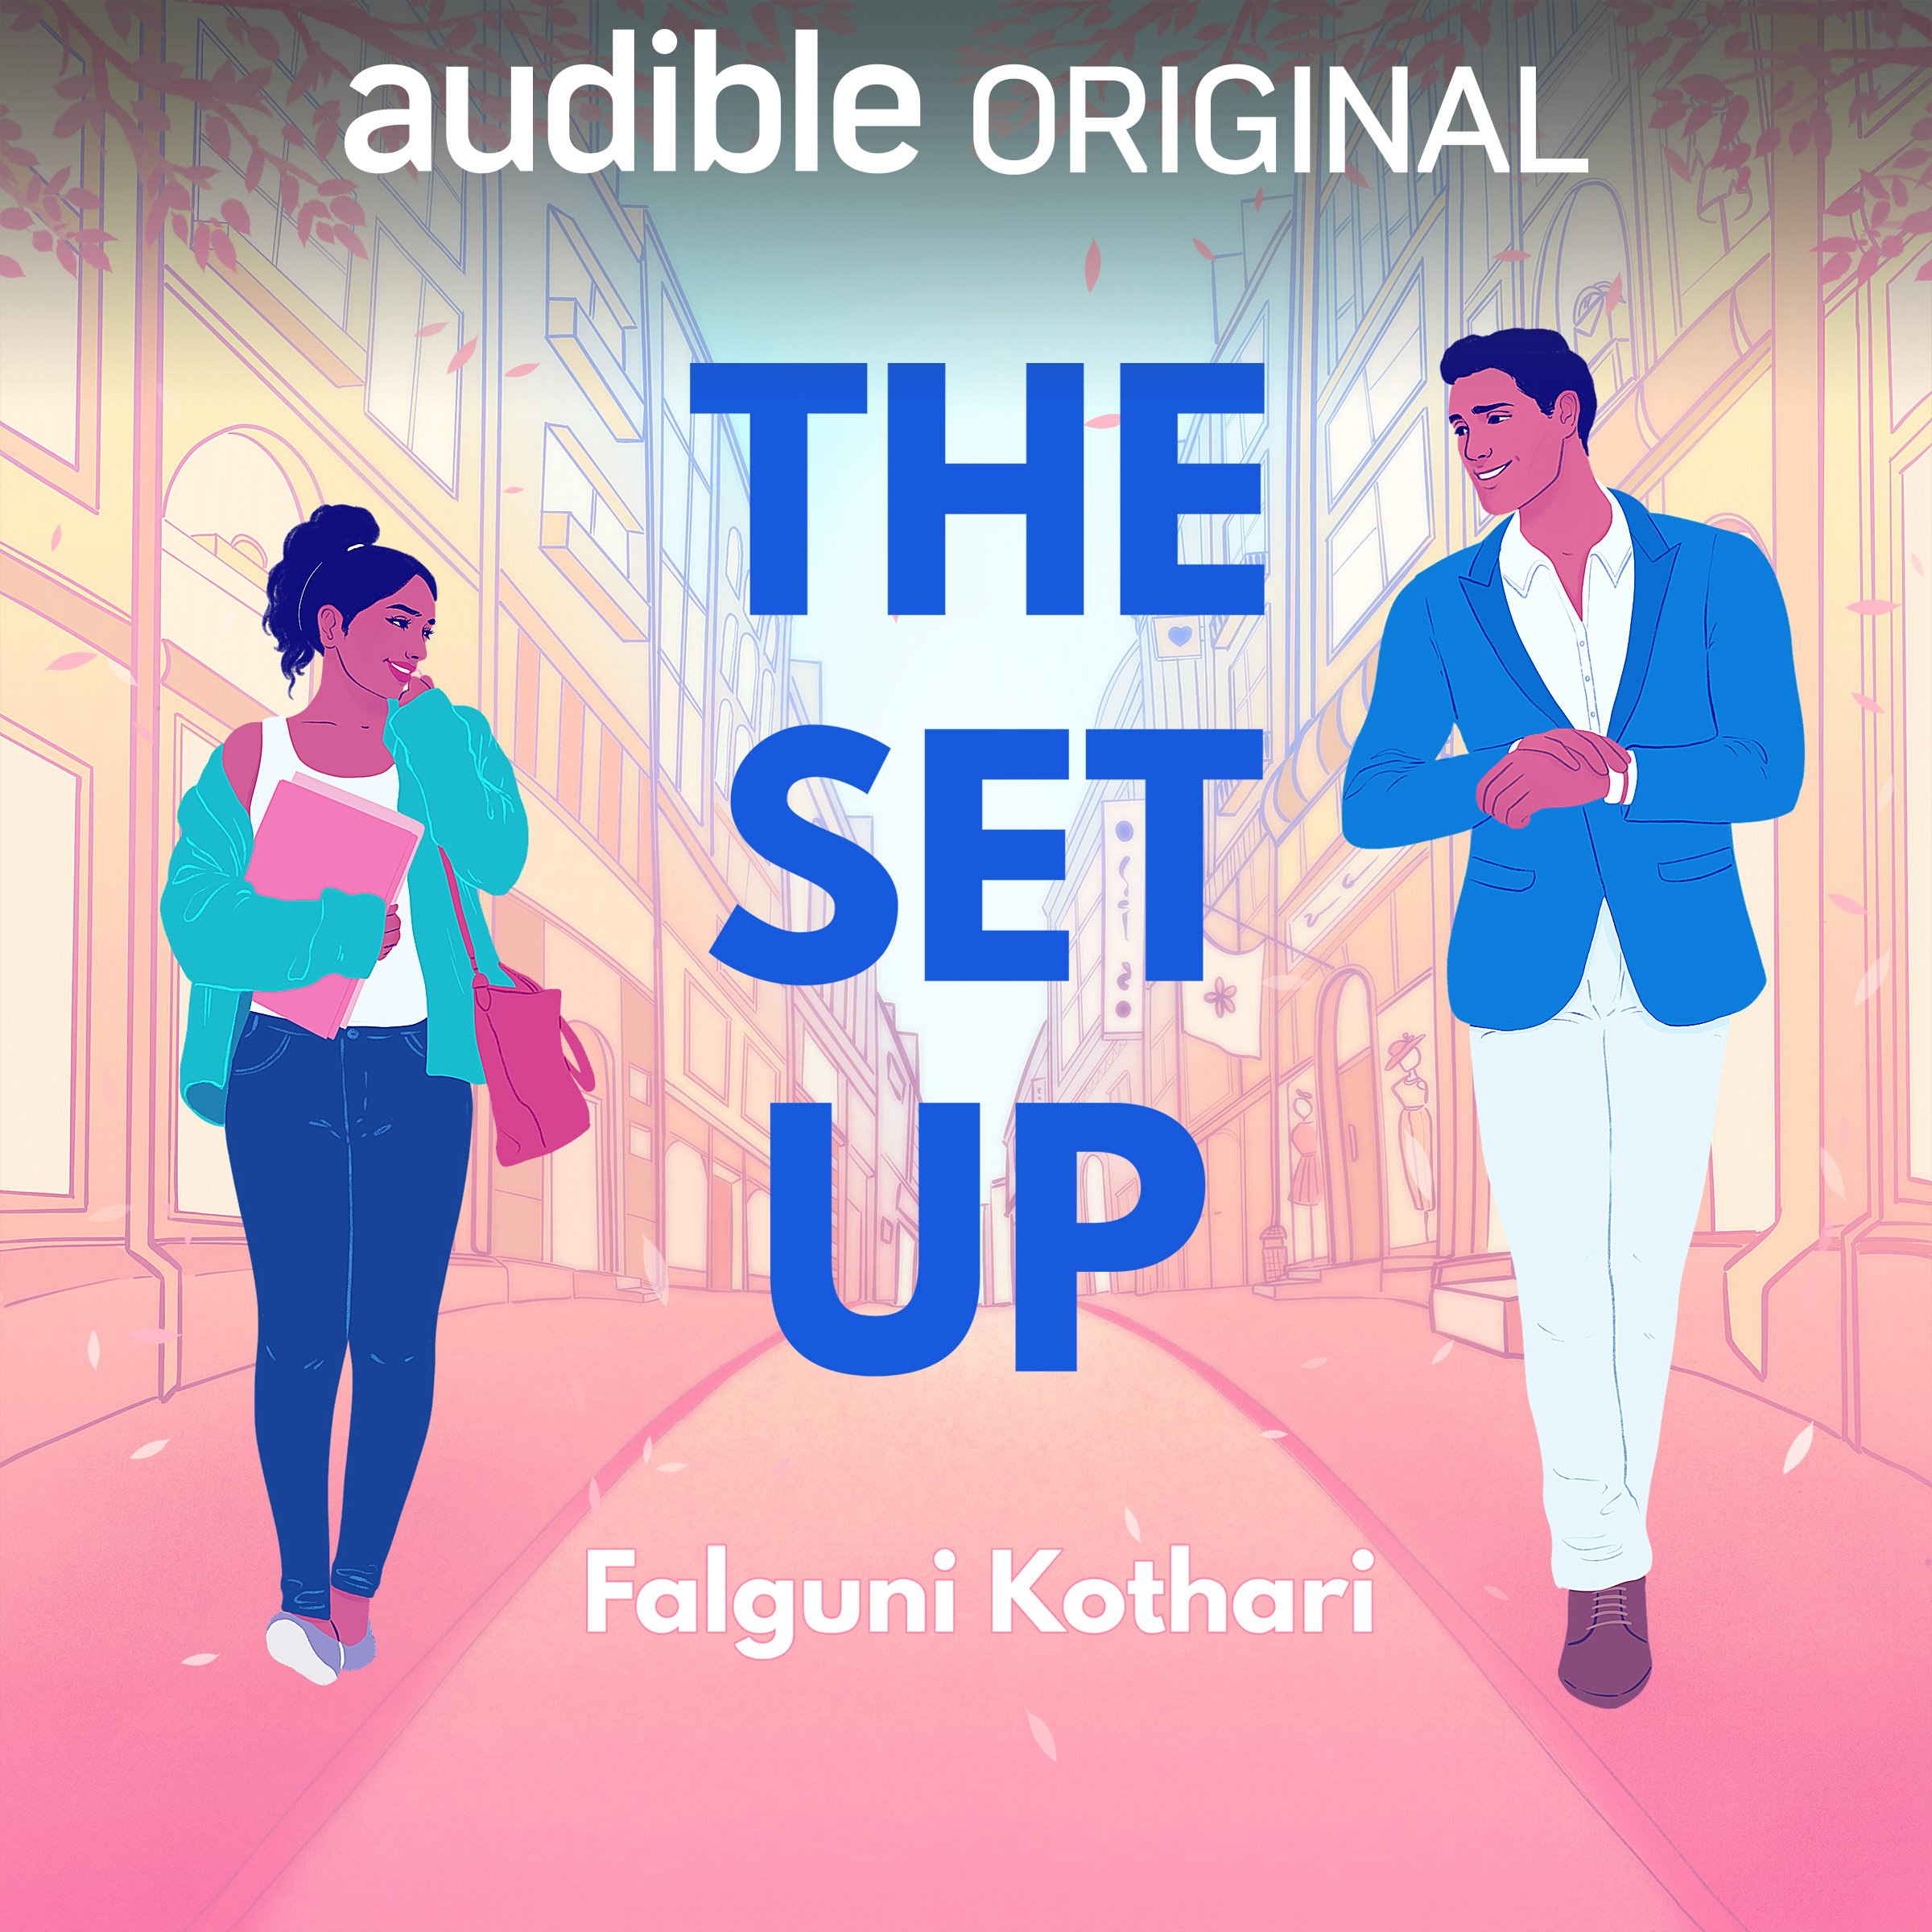 Cover for "The set up" by Falguni Kothari